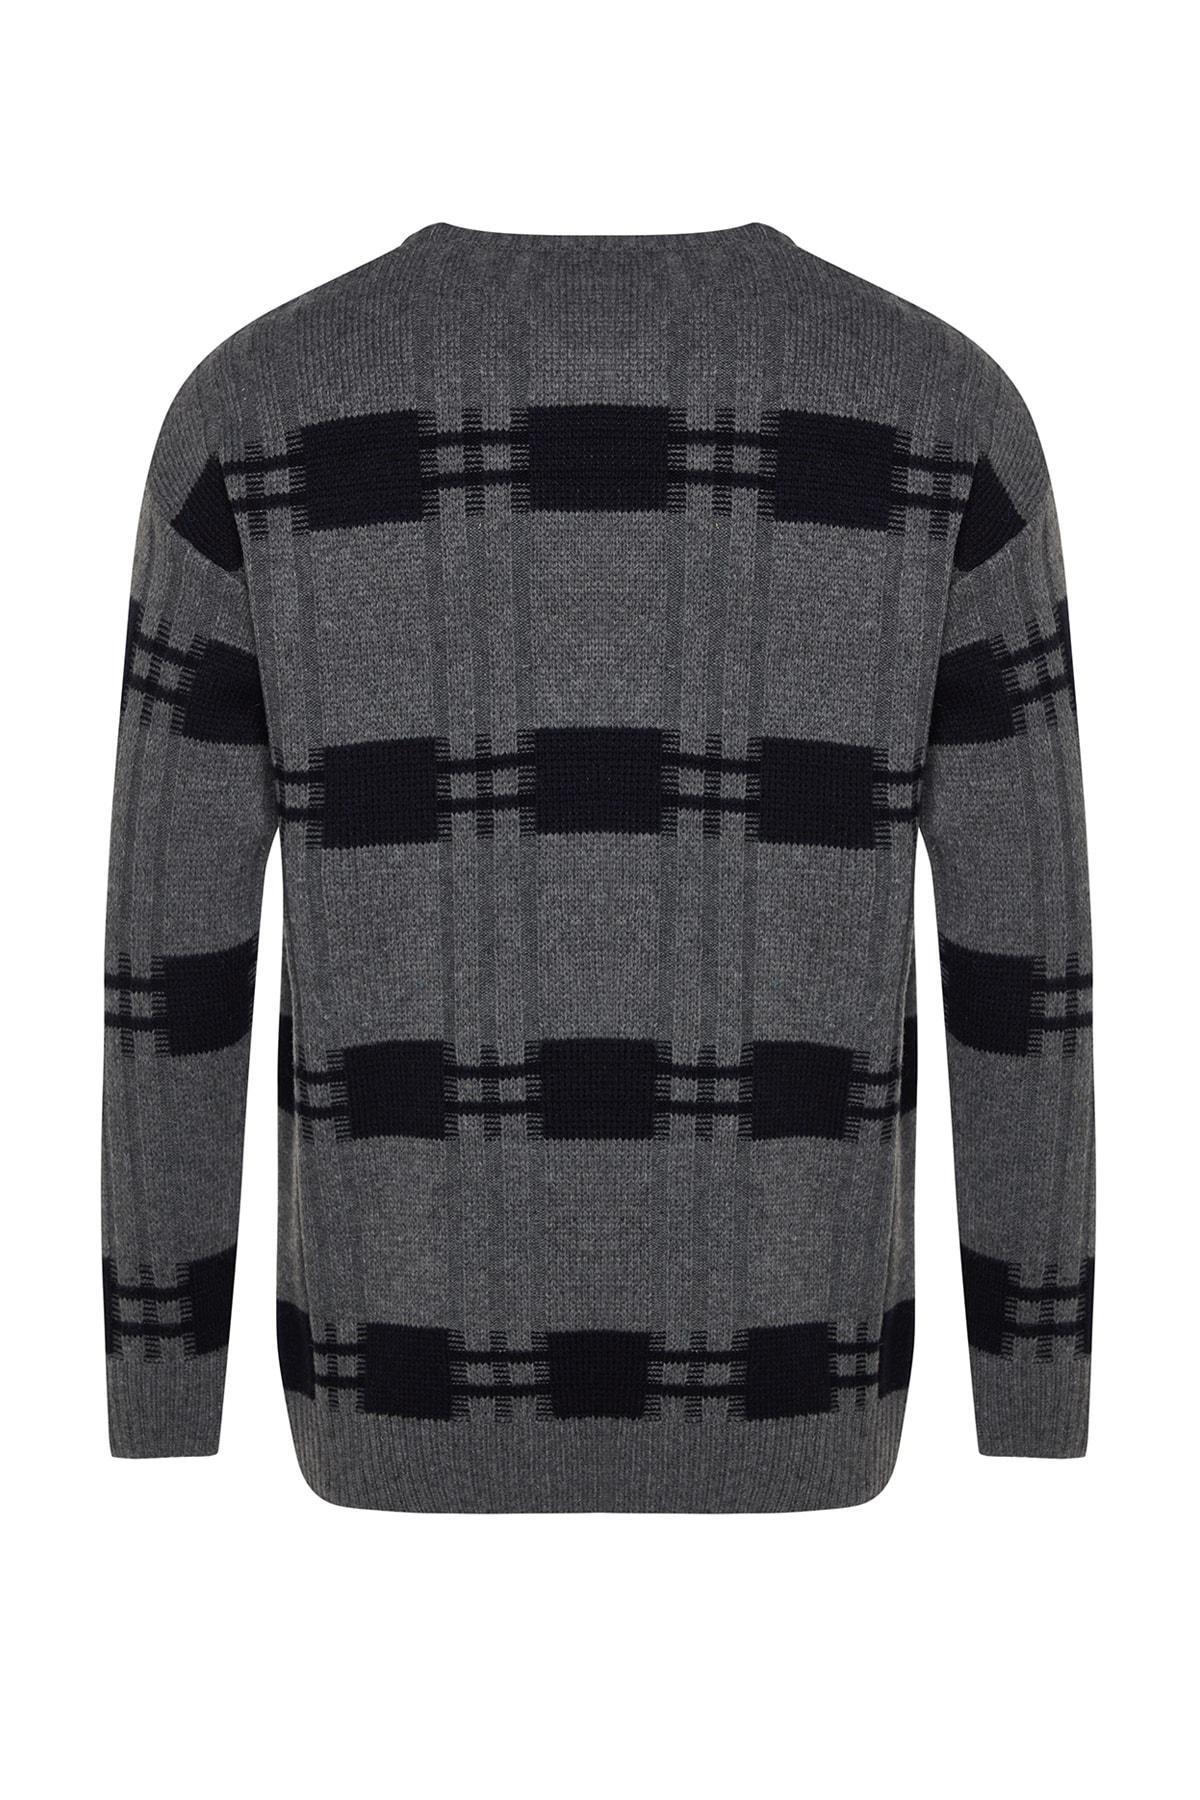 Trendyol - Grey Crew Neck Knitwear Sweater